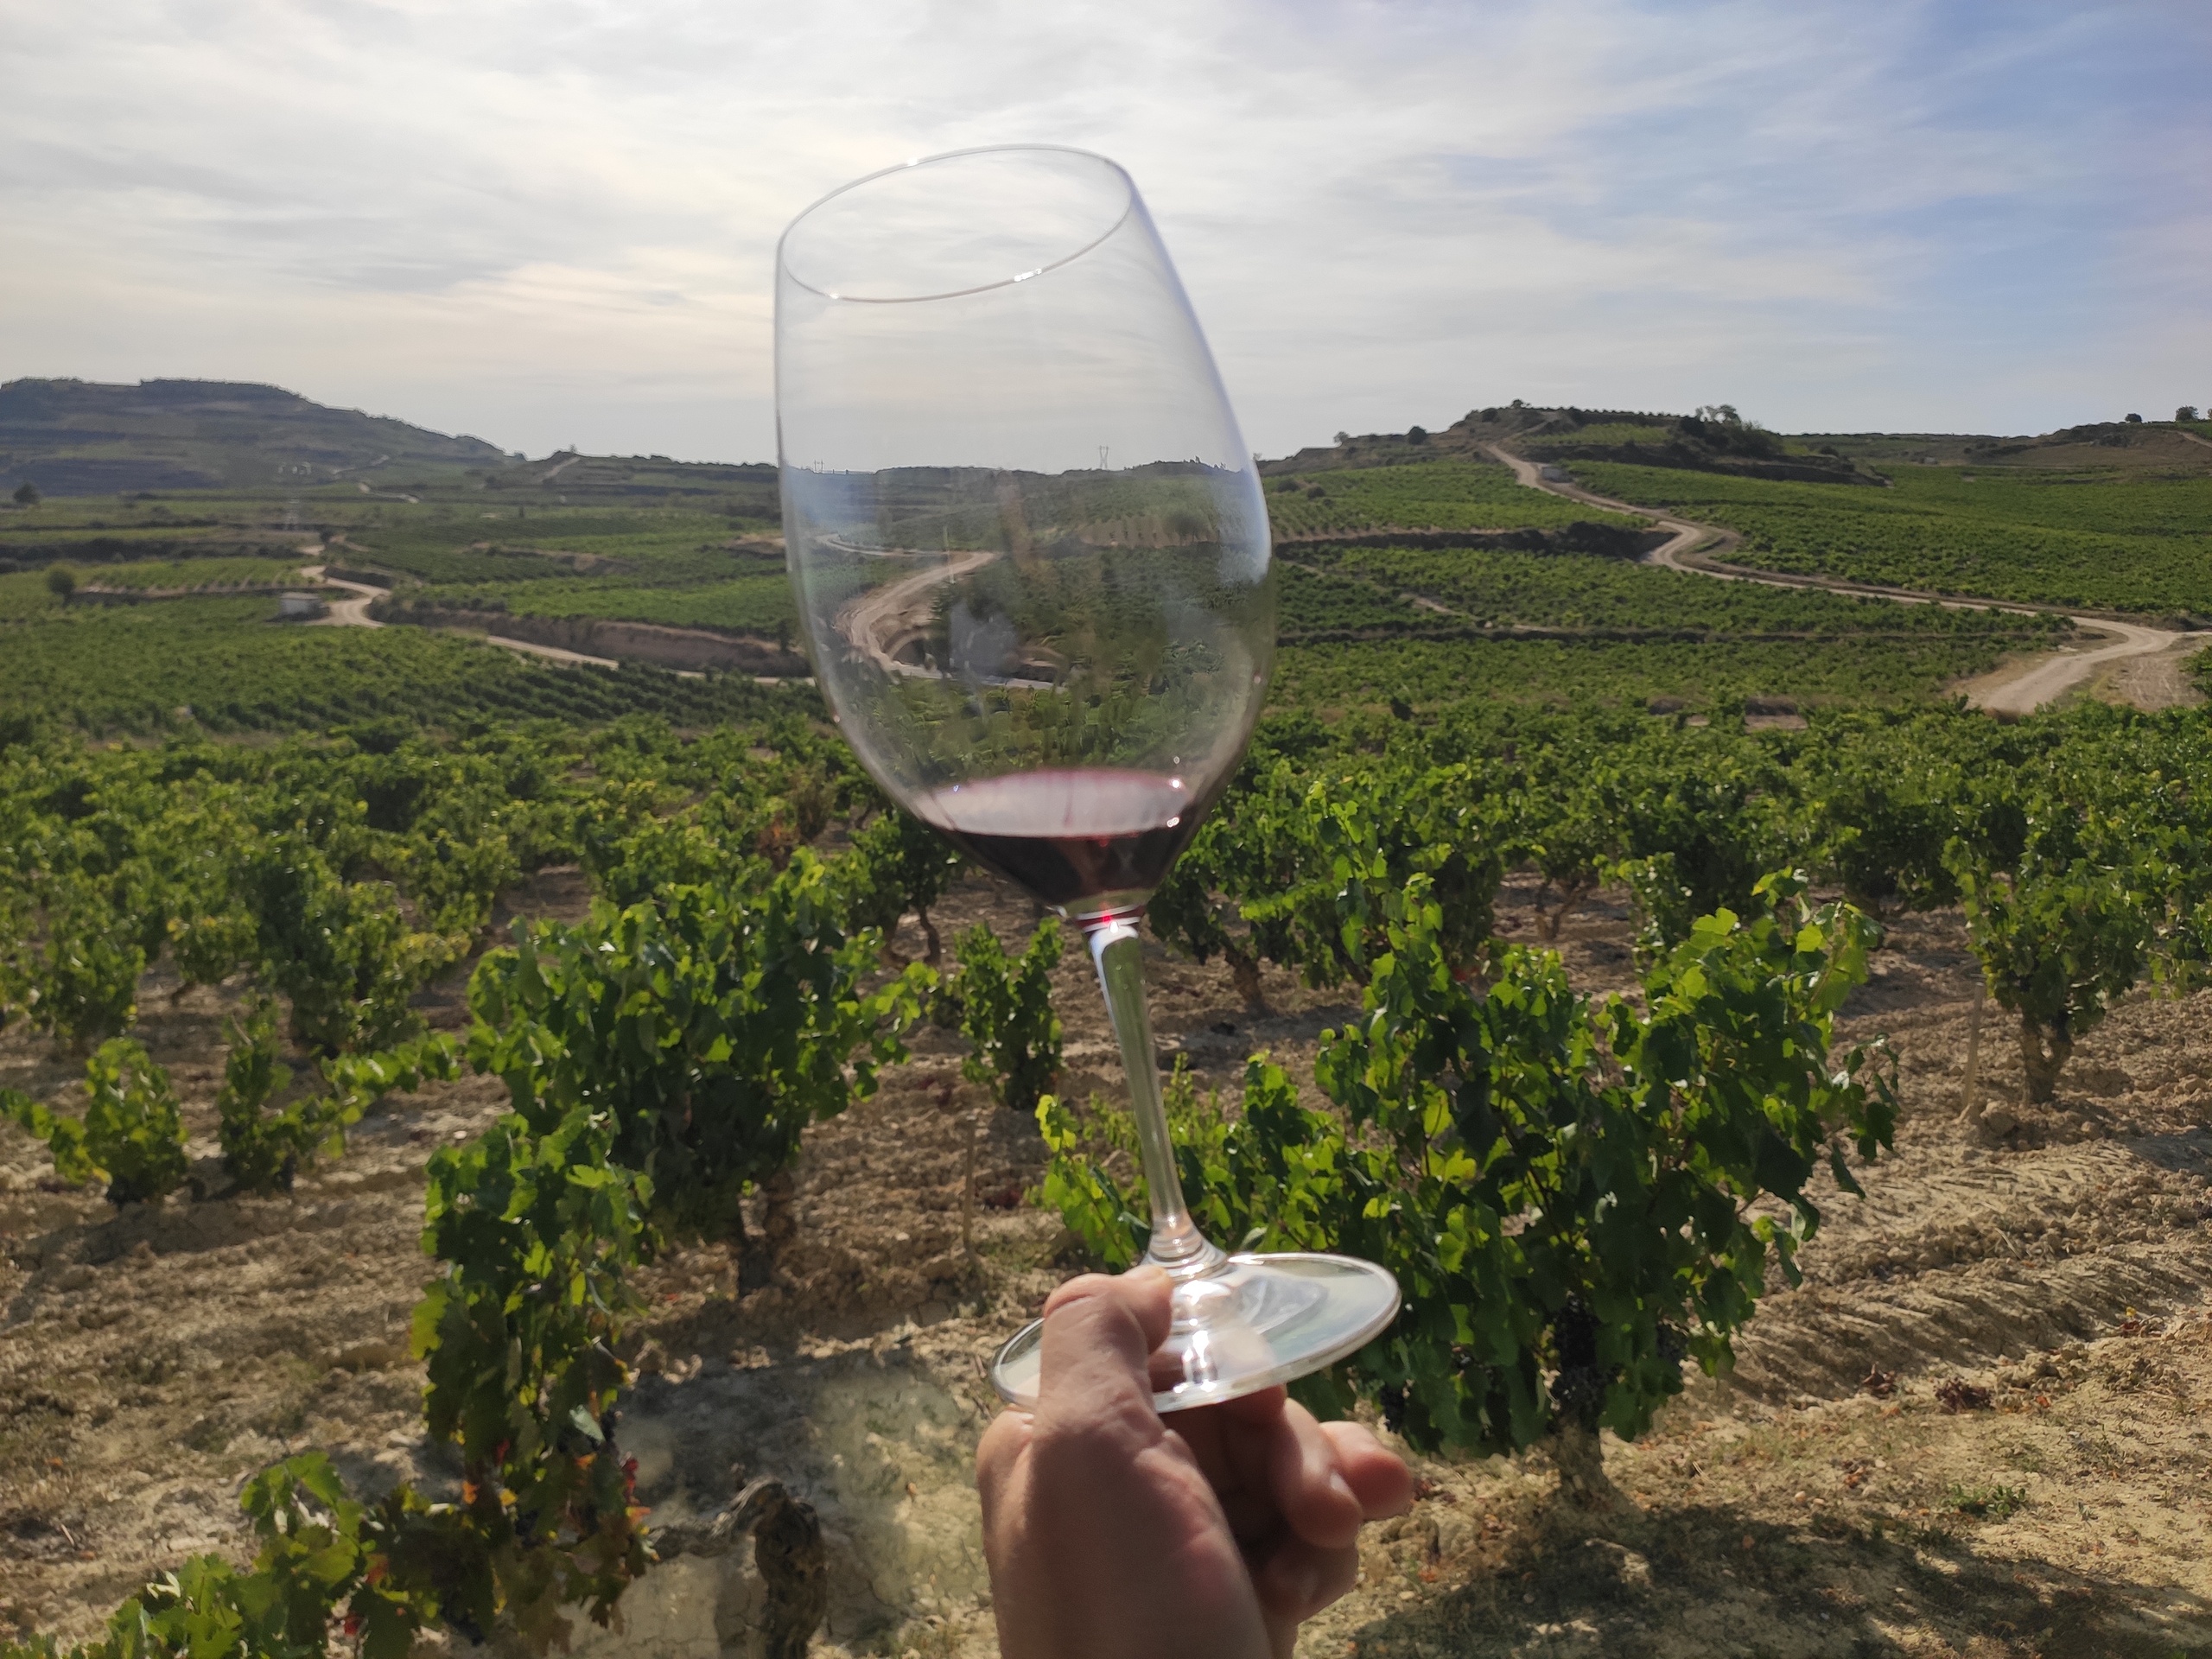 Tour de vinos Rioja: 2 bodegas desde Pamplona en Semi-Privado con Recogida - Alojamientos en Pamplona